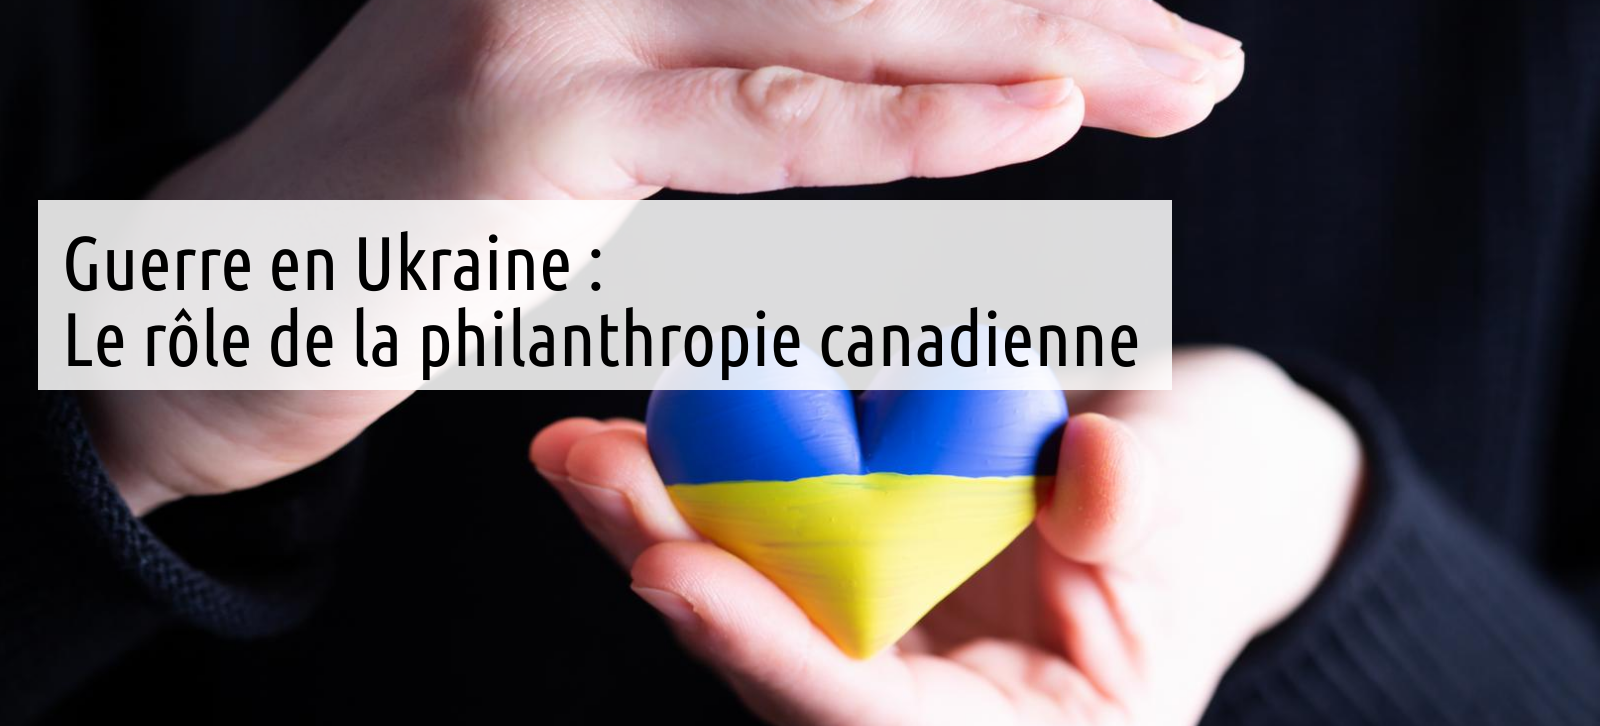 Guerre Ukraine philanthropie canadienne